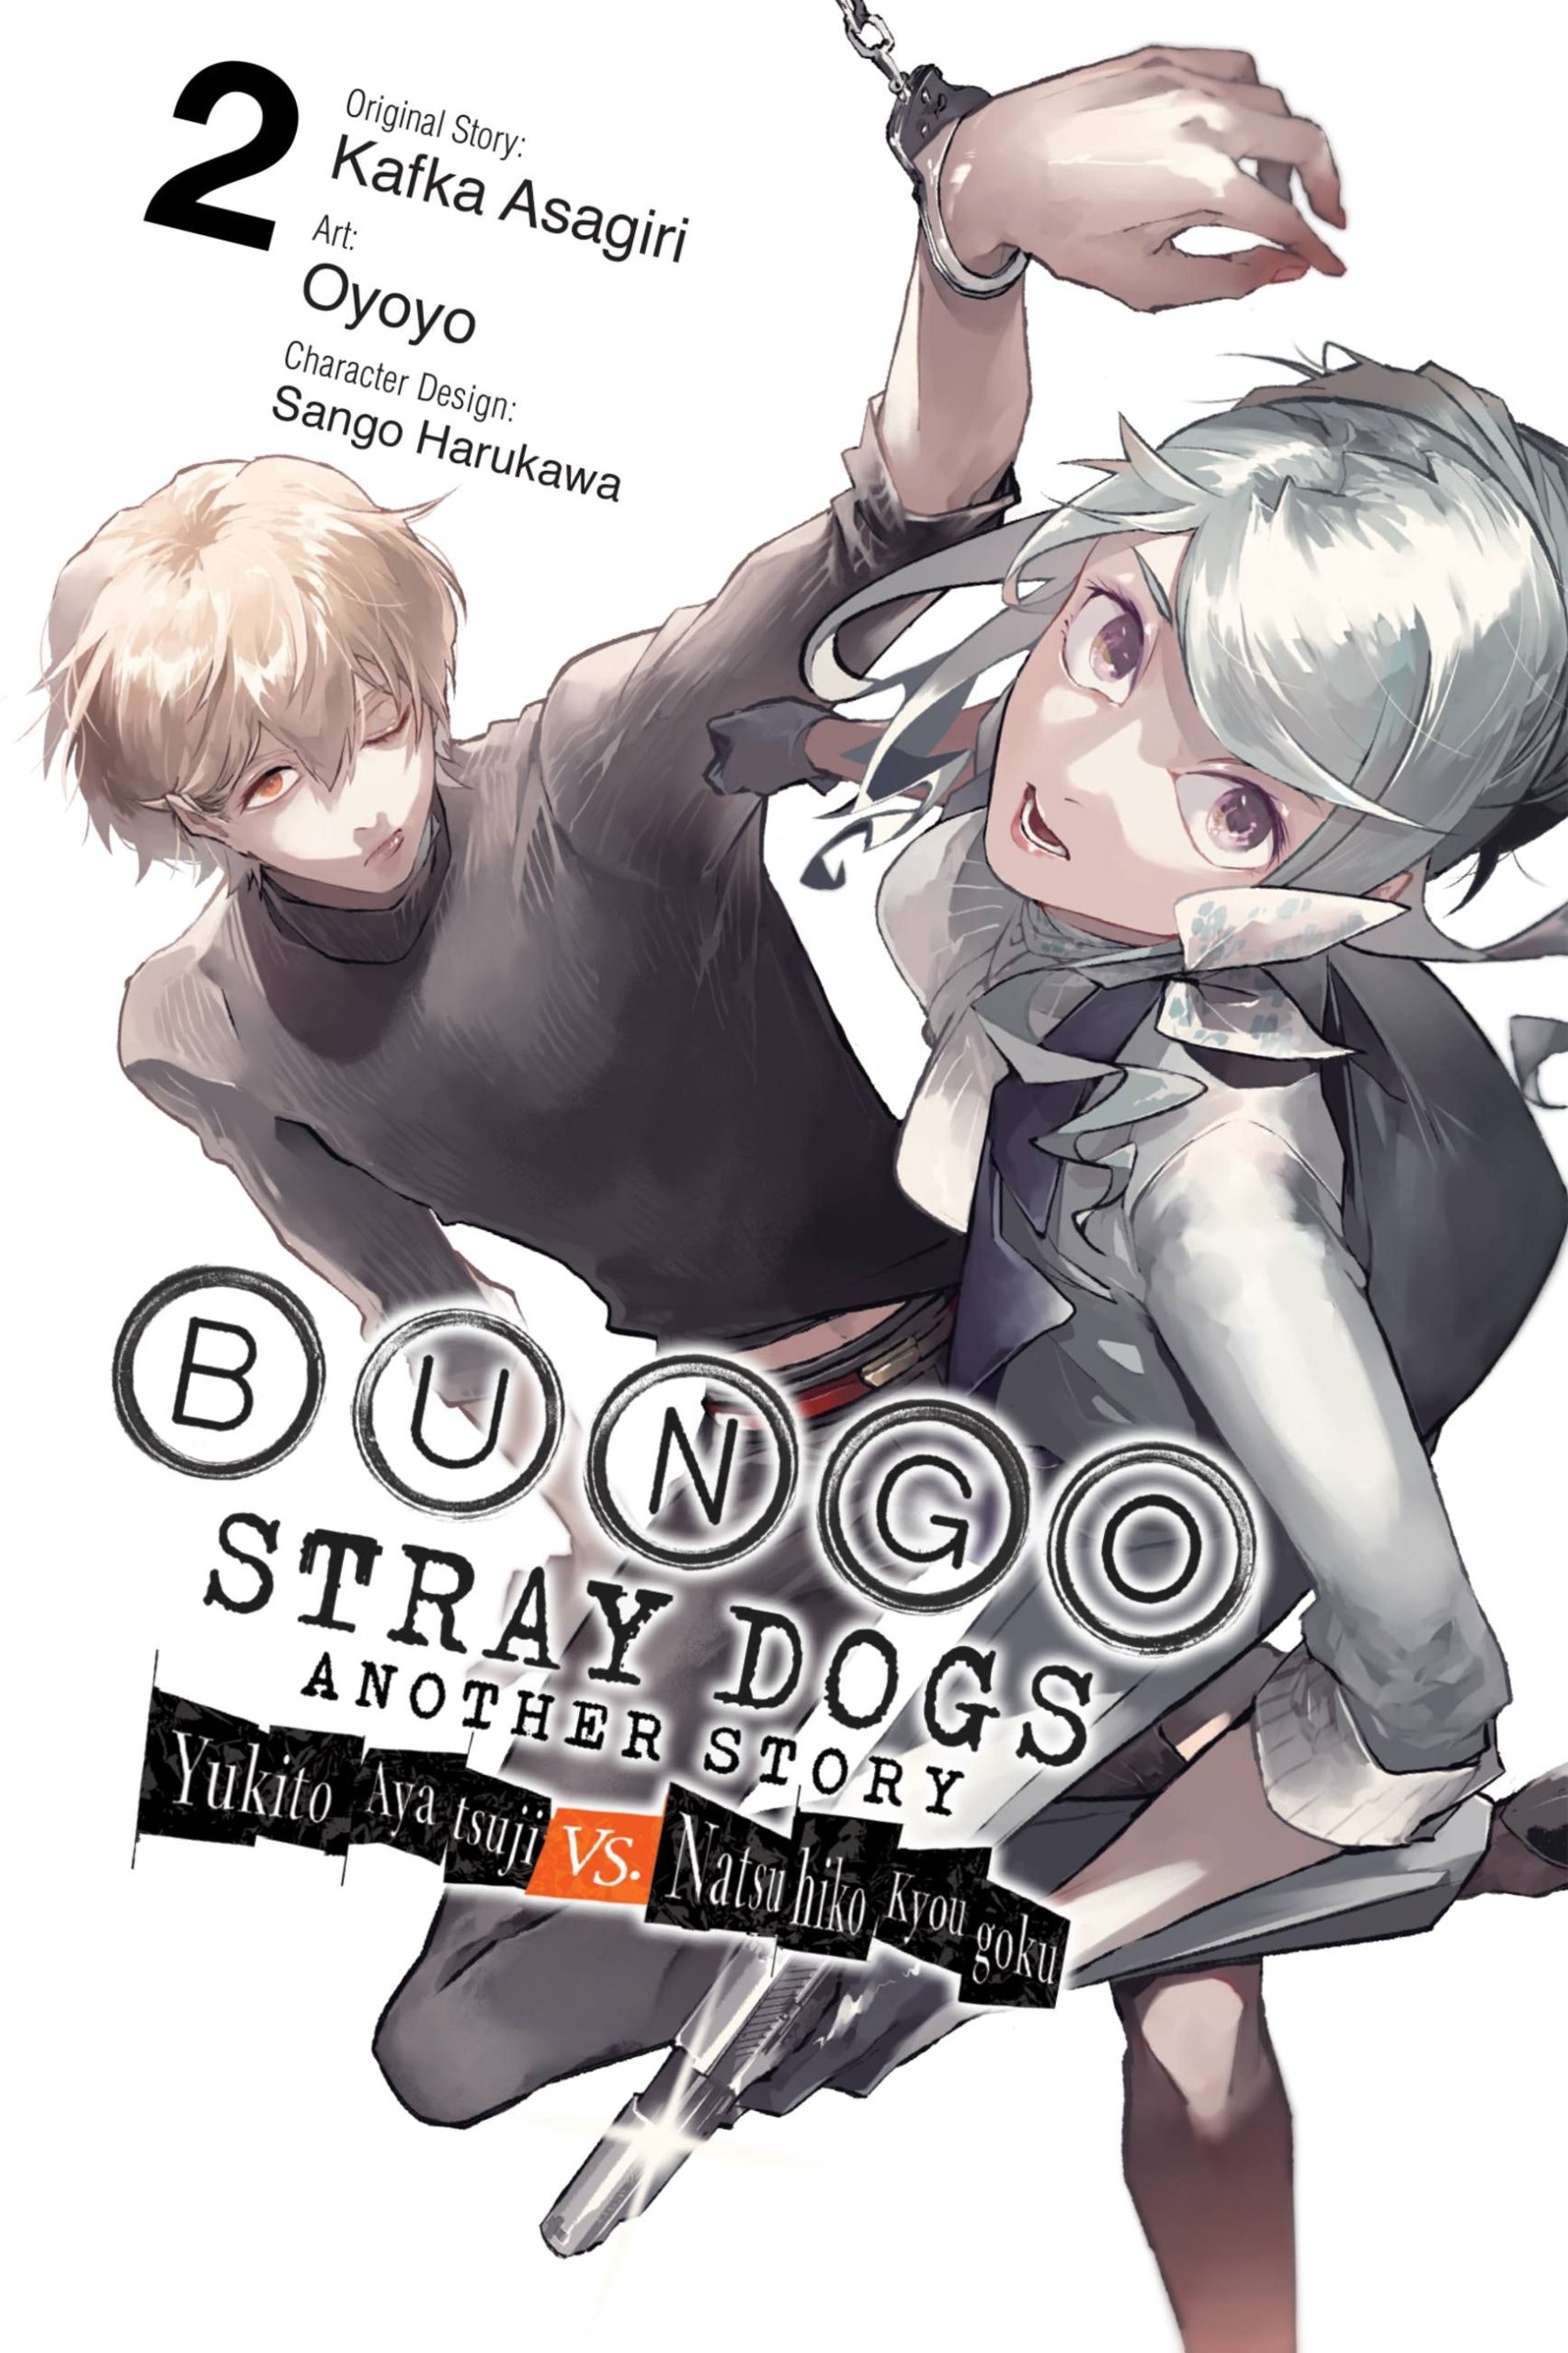 Bungo Stray Dogs Manga